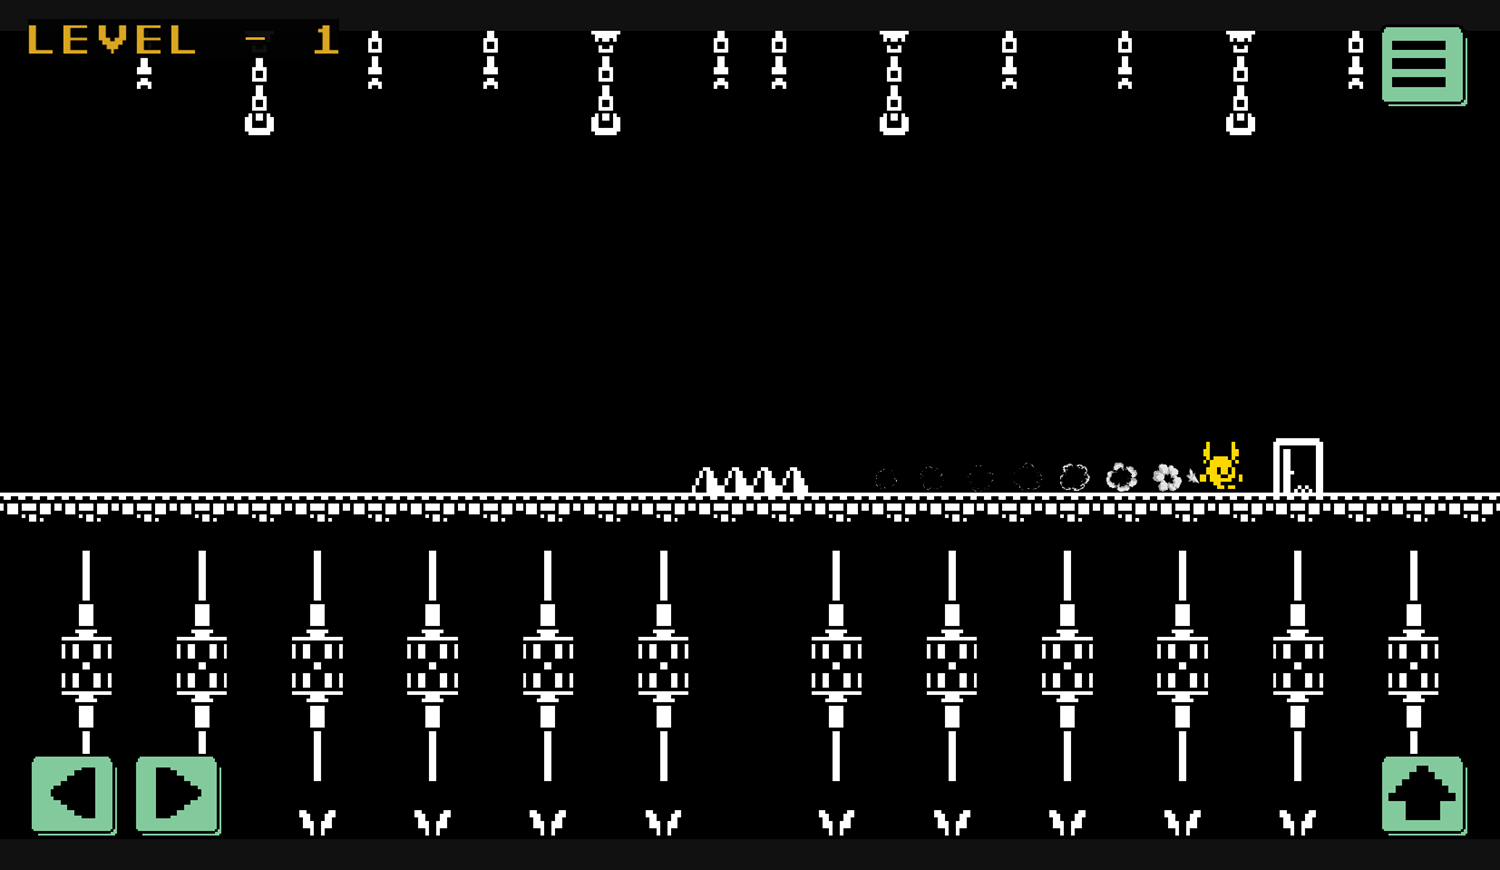 One Bit Survival Game Level Complete Screenshot.